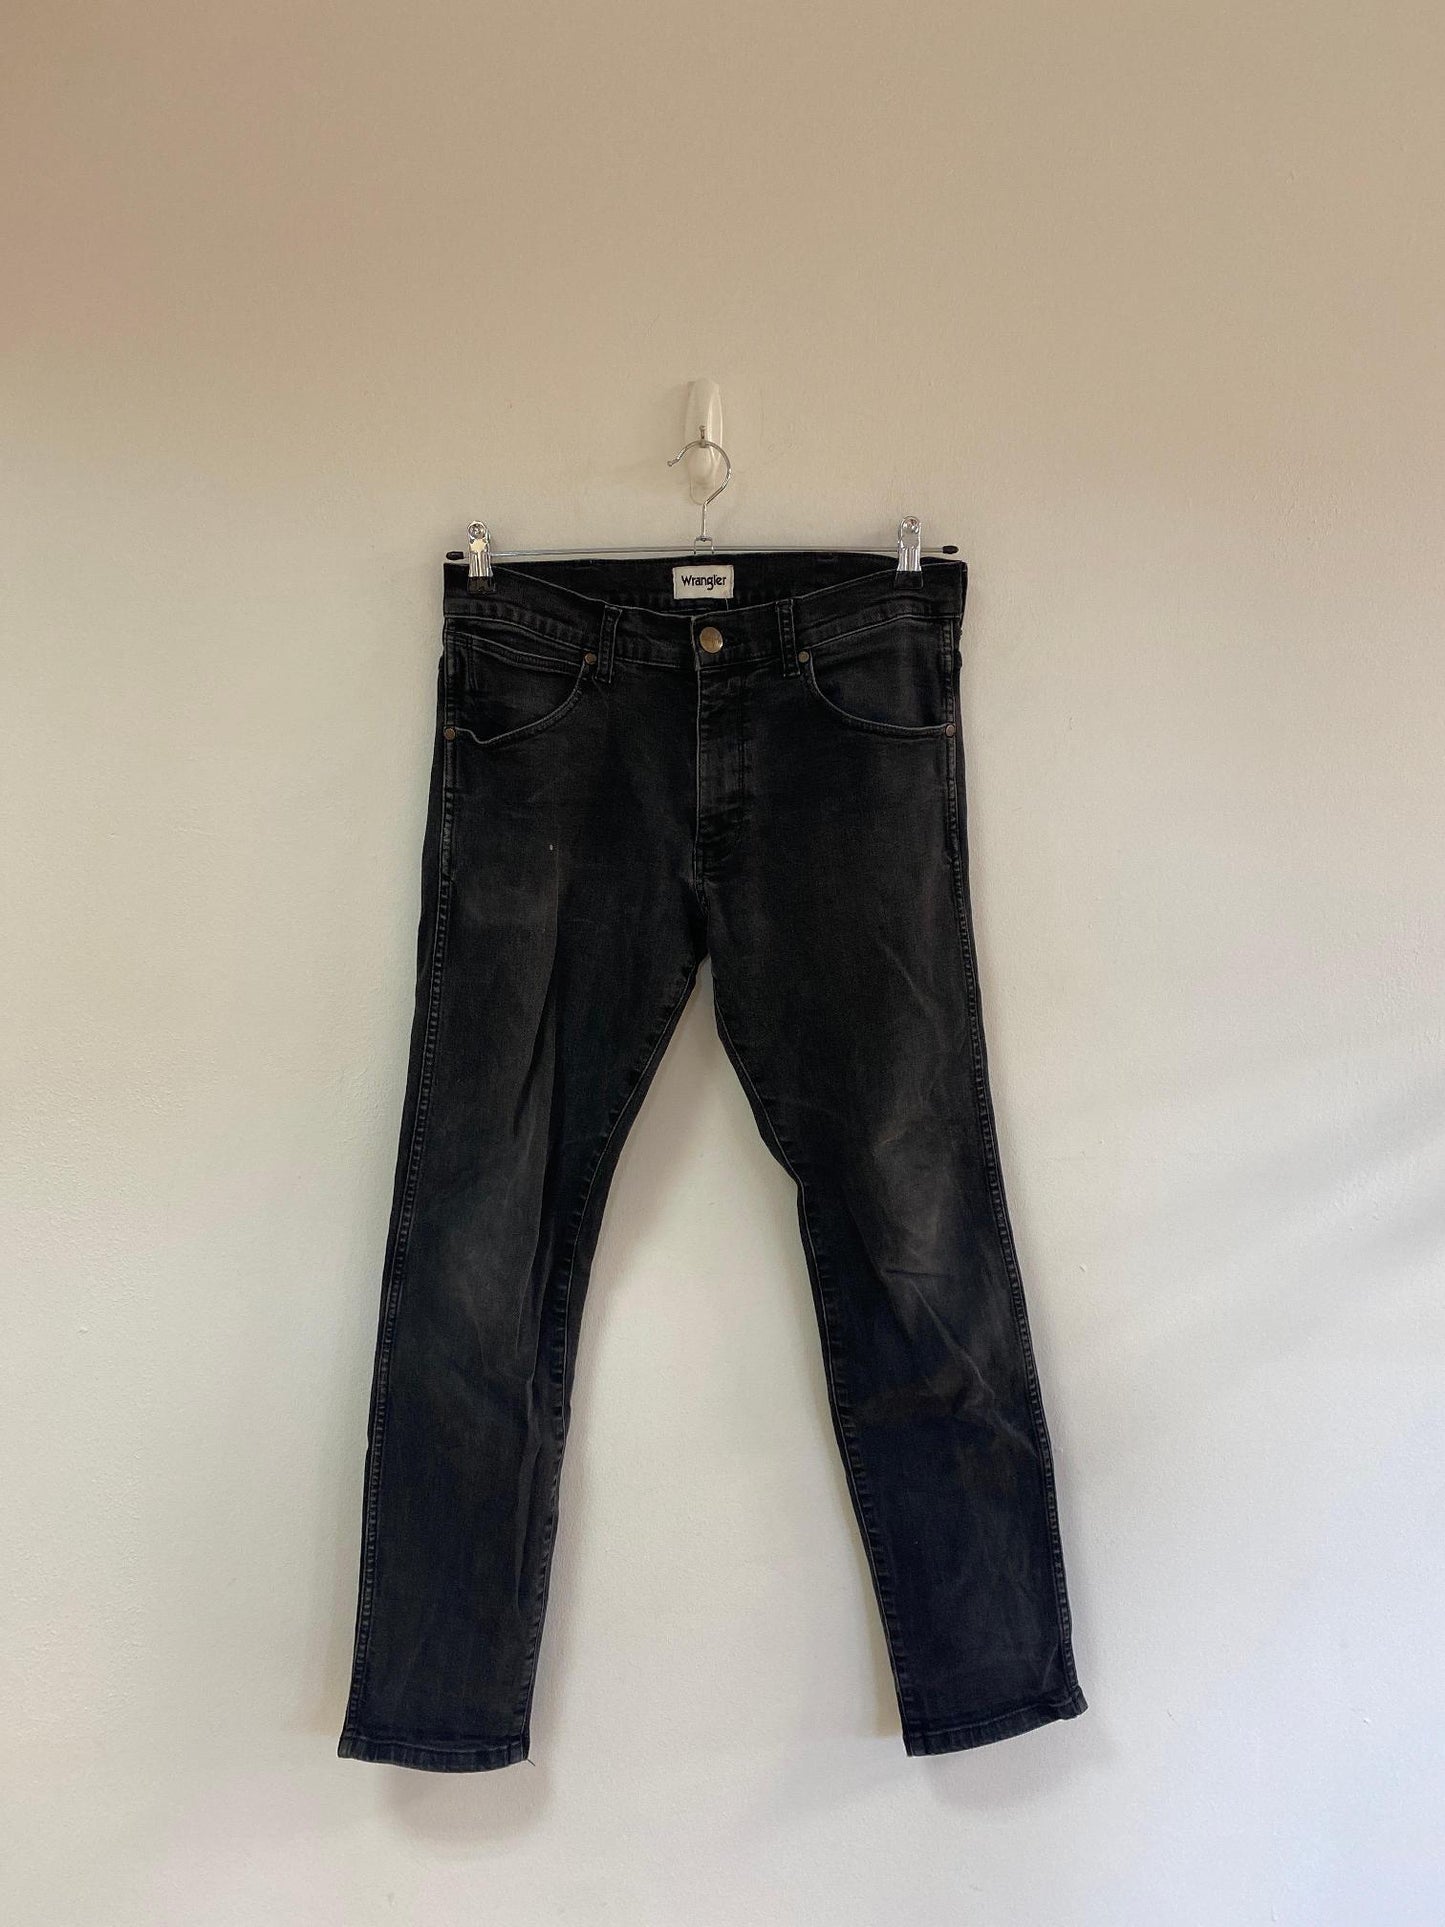 Black low rise straight leg jeans, Wrangler, size 12 - Damaged Item Sale